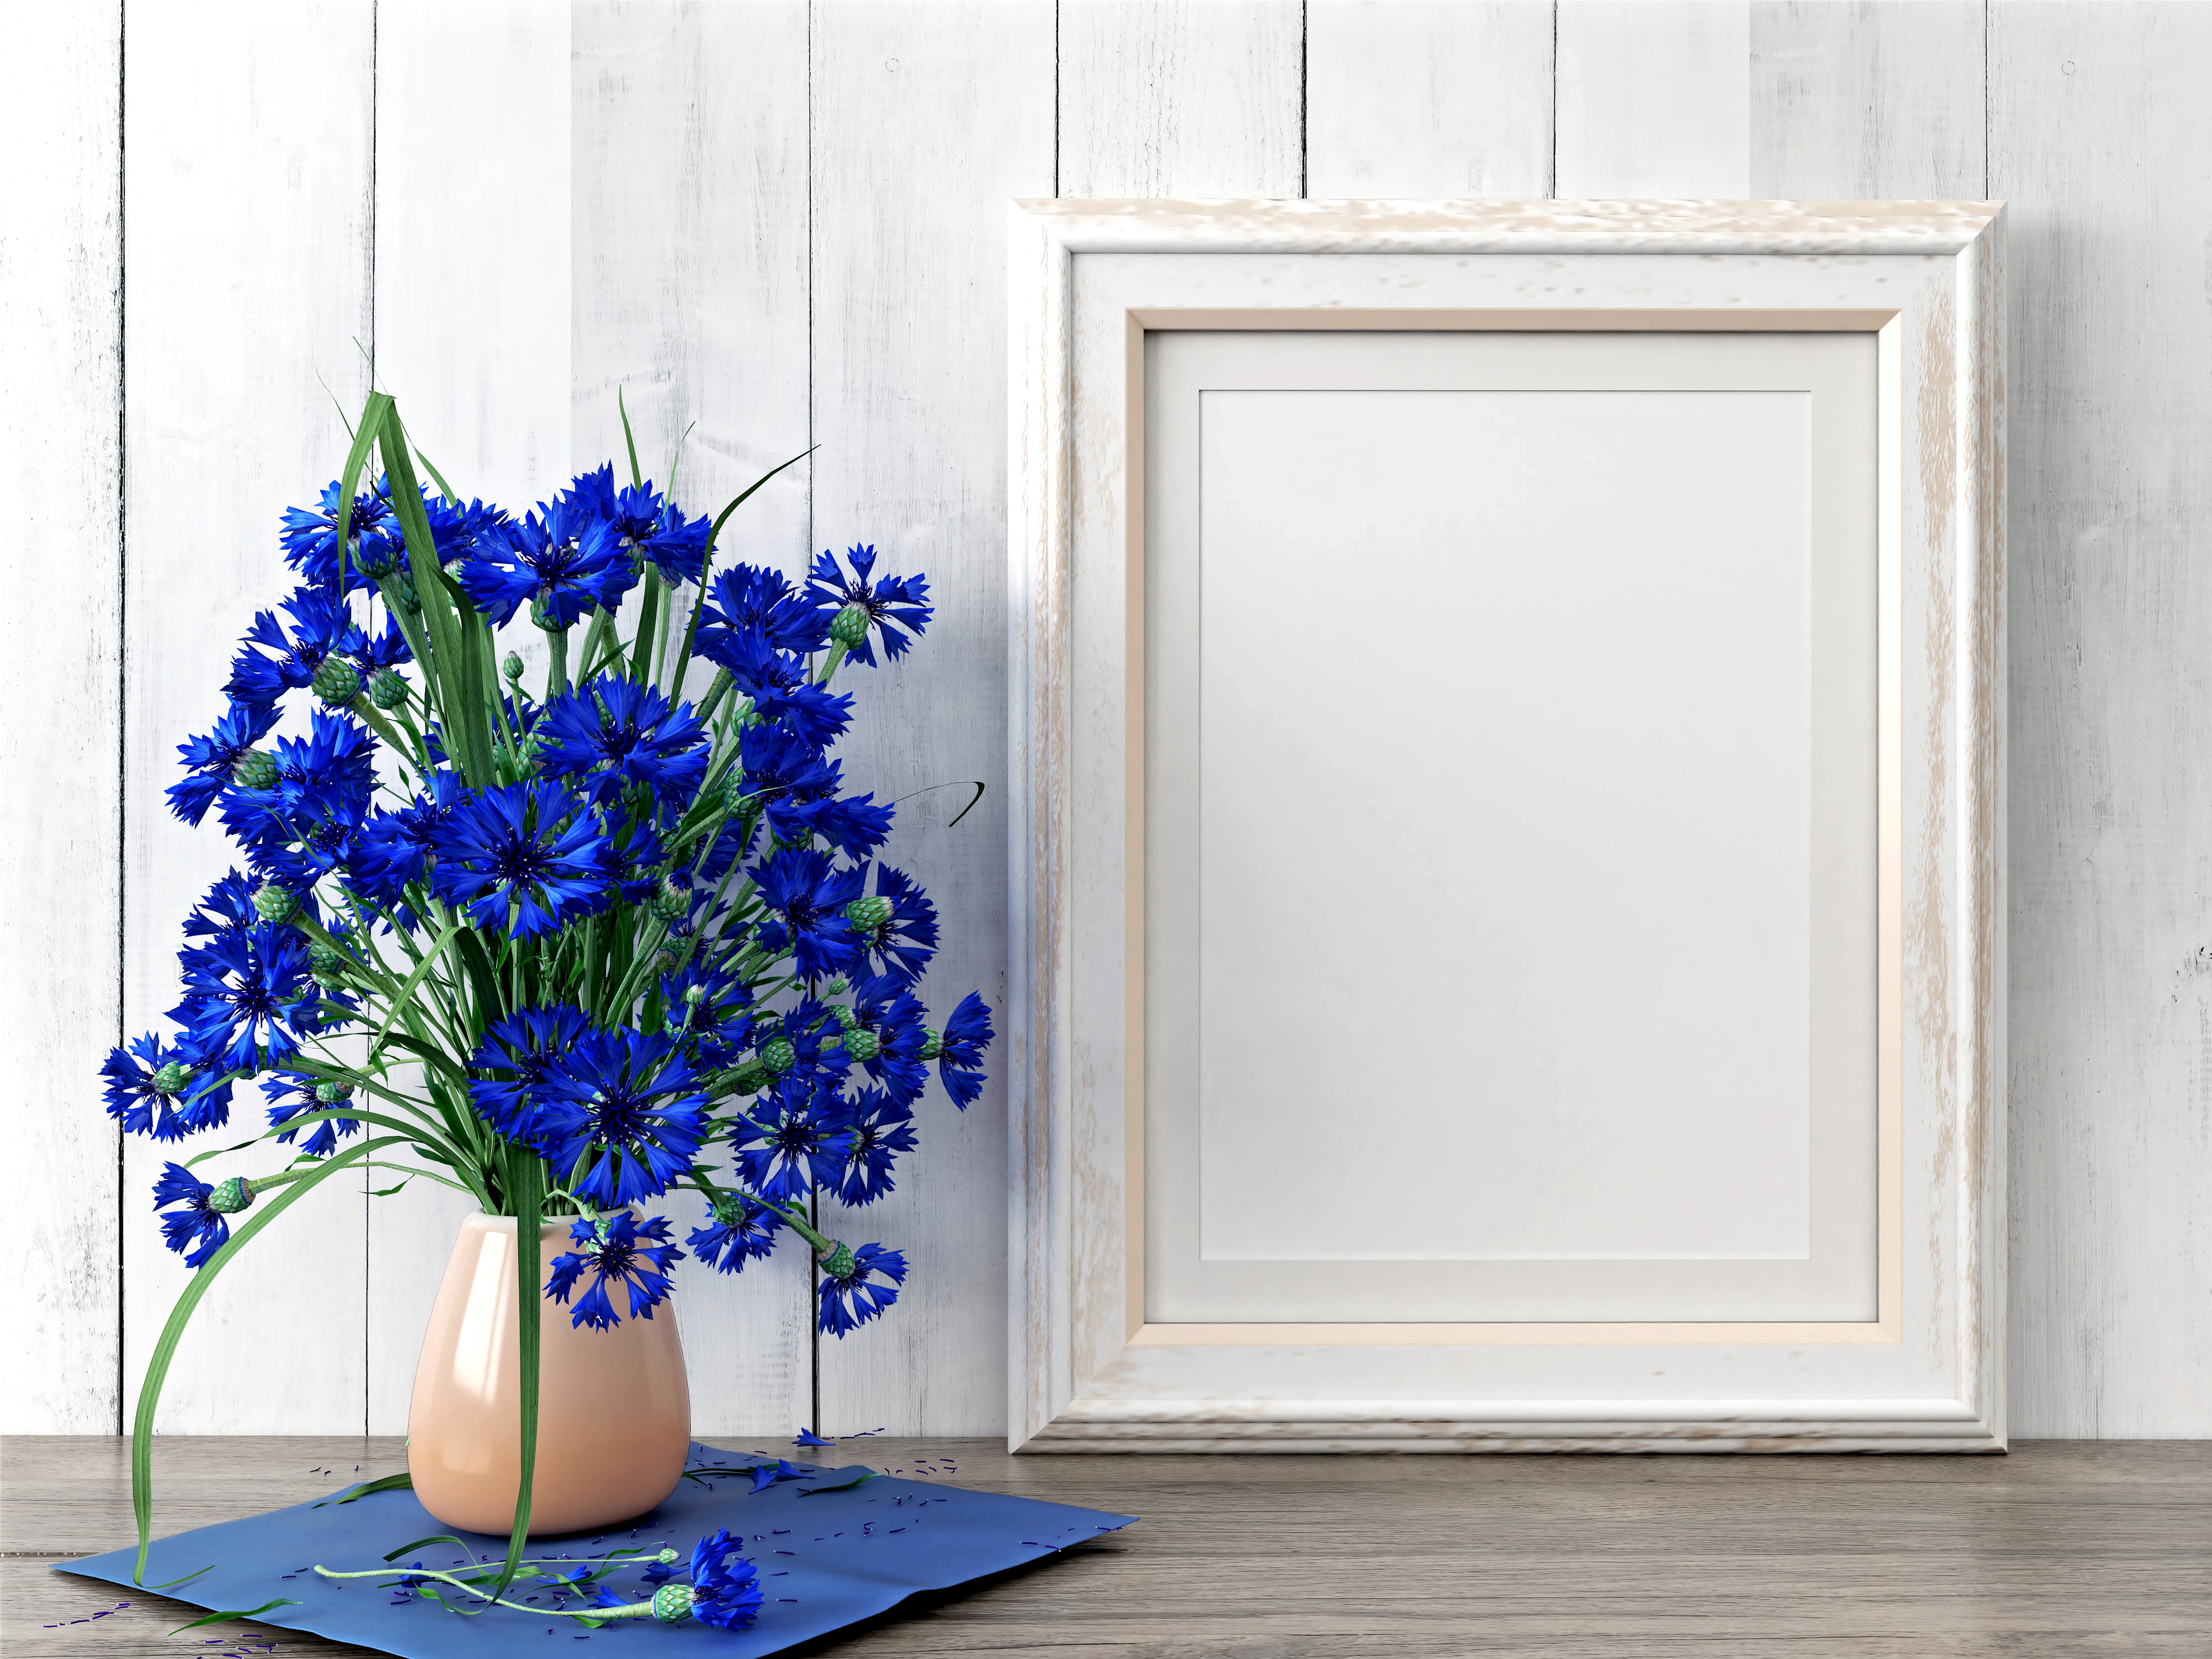 photography, still life, blue flower, cornflower, flower, vase